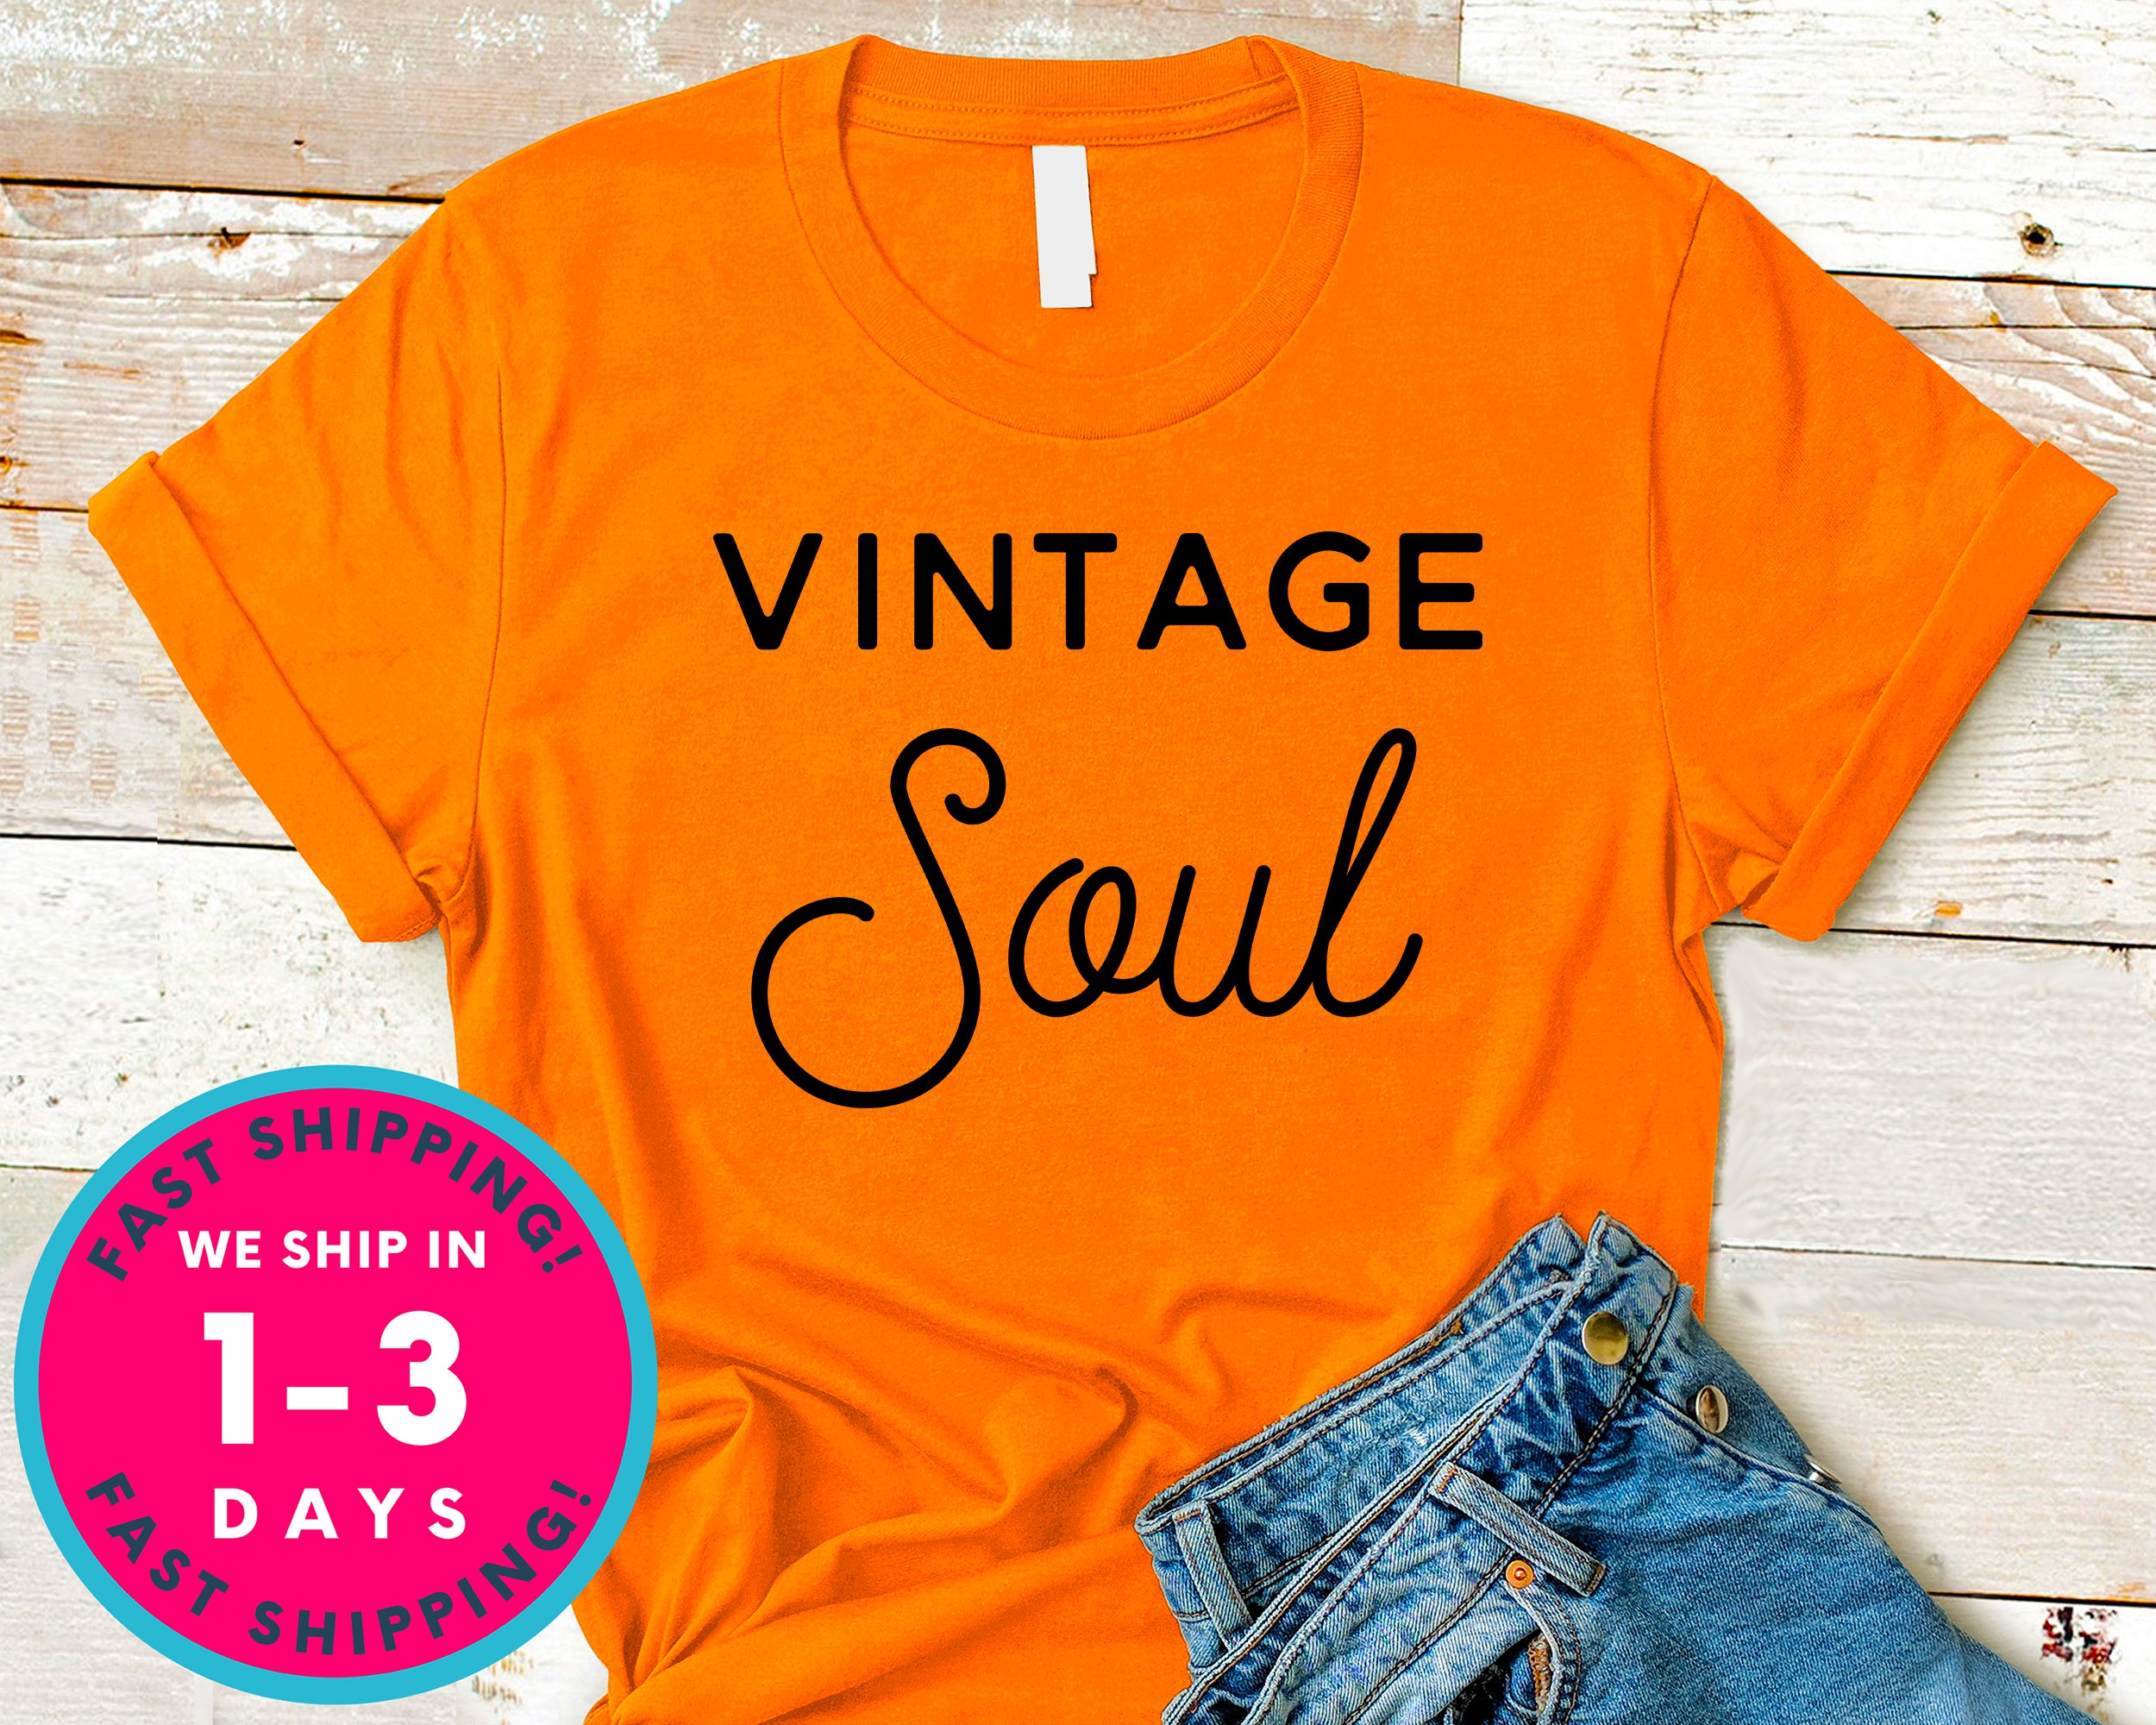 Vintage Soul T-Shirt - Inspirational Quotes Saying Shirt